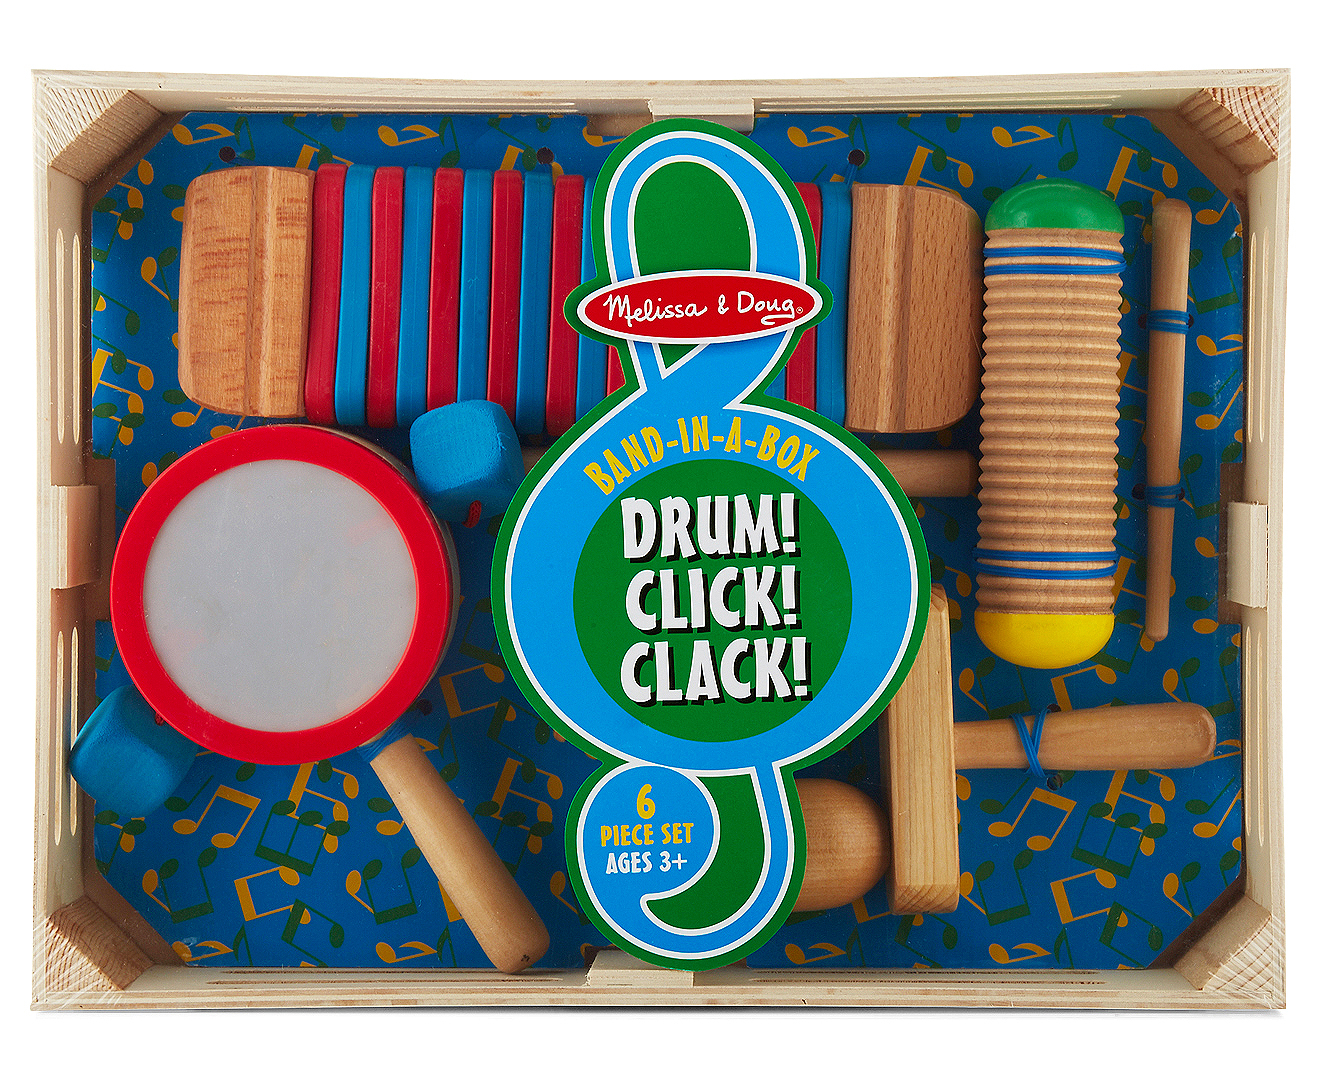 Melissa & Doug Band-In-A-Box - Drum! Click! Clack! Instruments